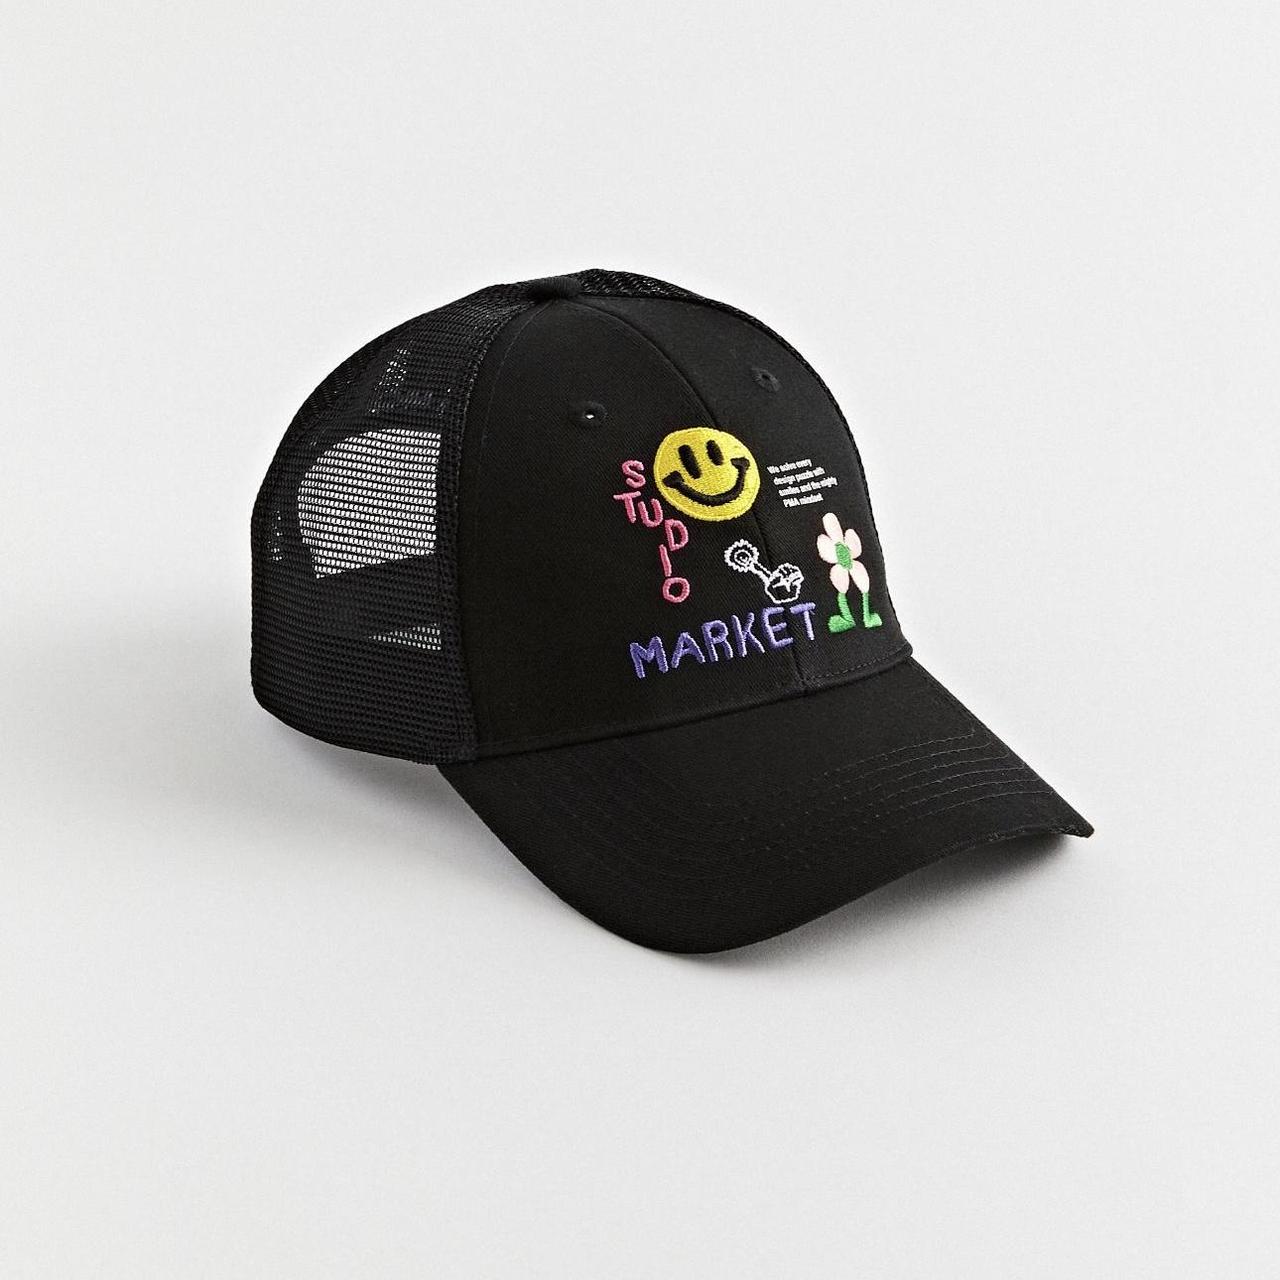 Market Men's Hat